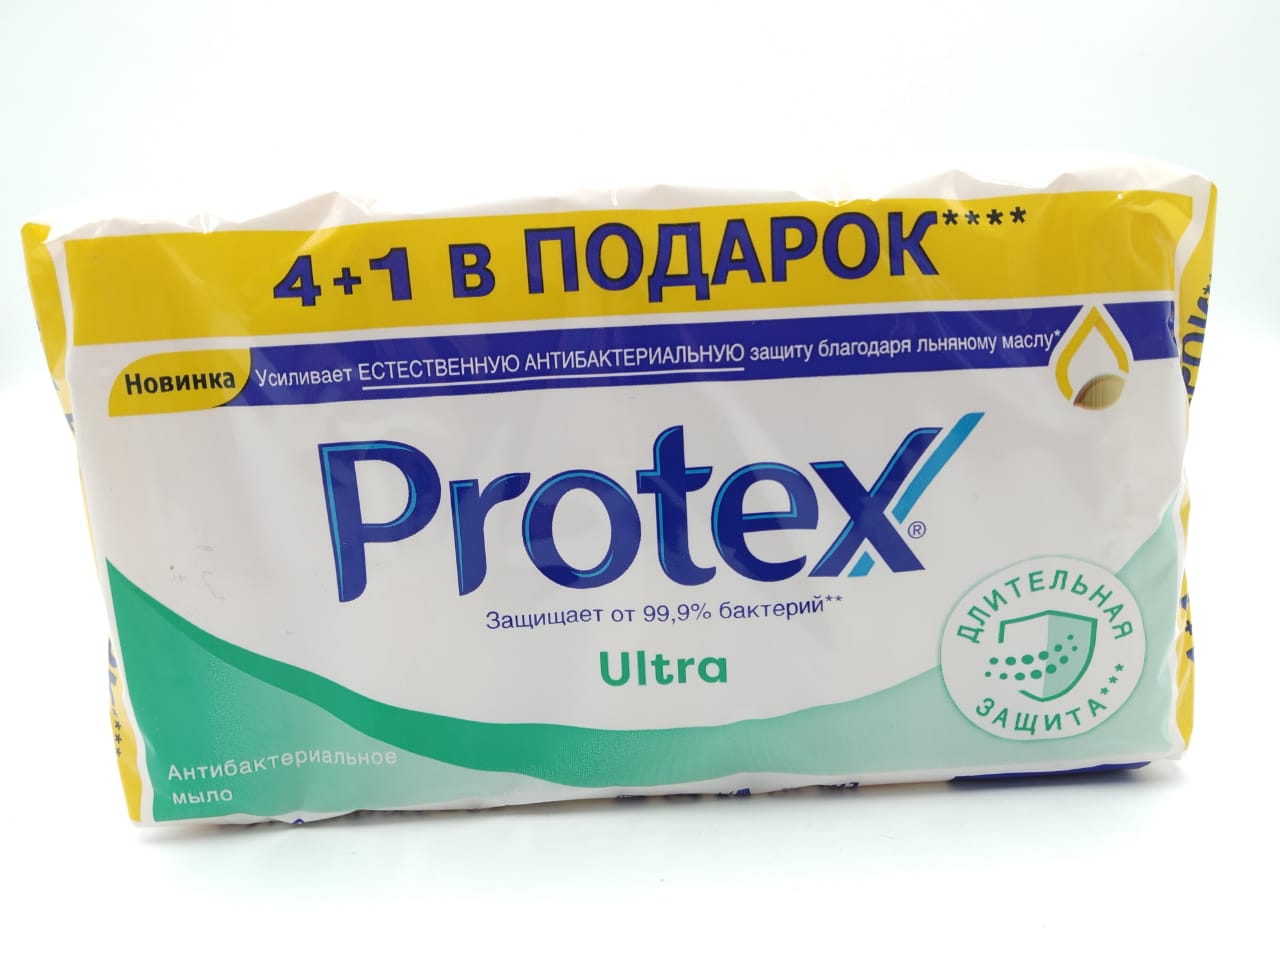 Protex Мыло Ultra мультипак 24x5x70гр New